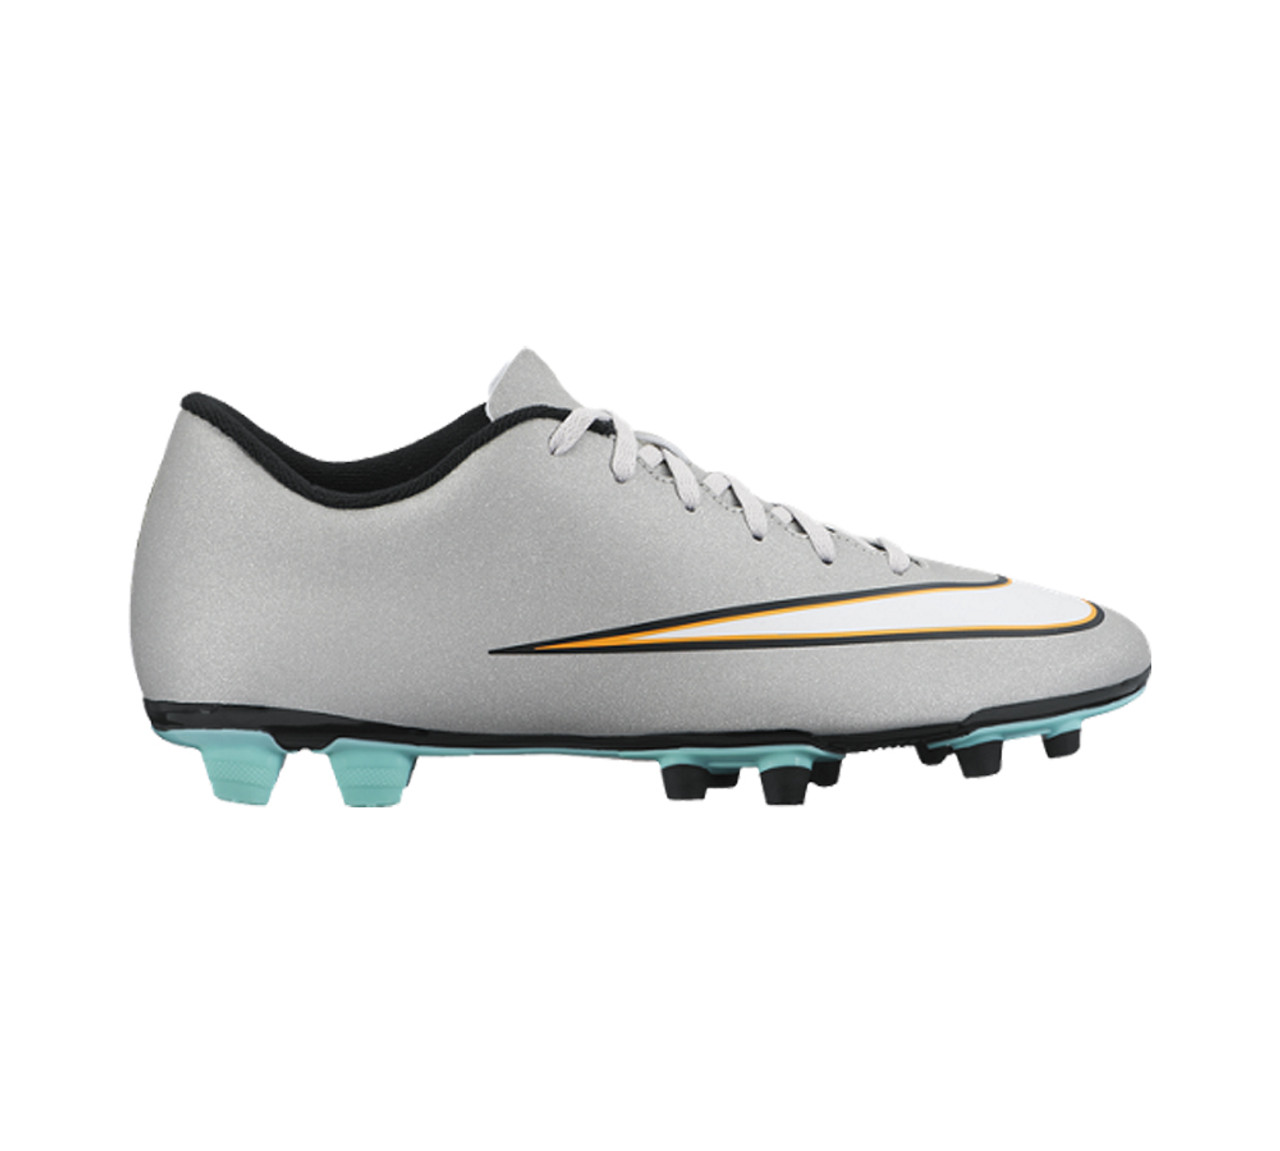 Nike Men's Mercurial Vortex II CR FG Soccer Cleat - Silver | Discount Nike Men's & More - Shoolu.com | Shoolu.com